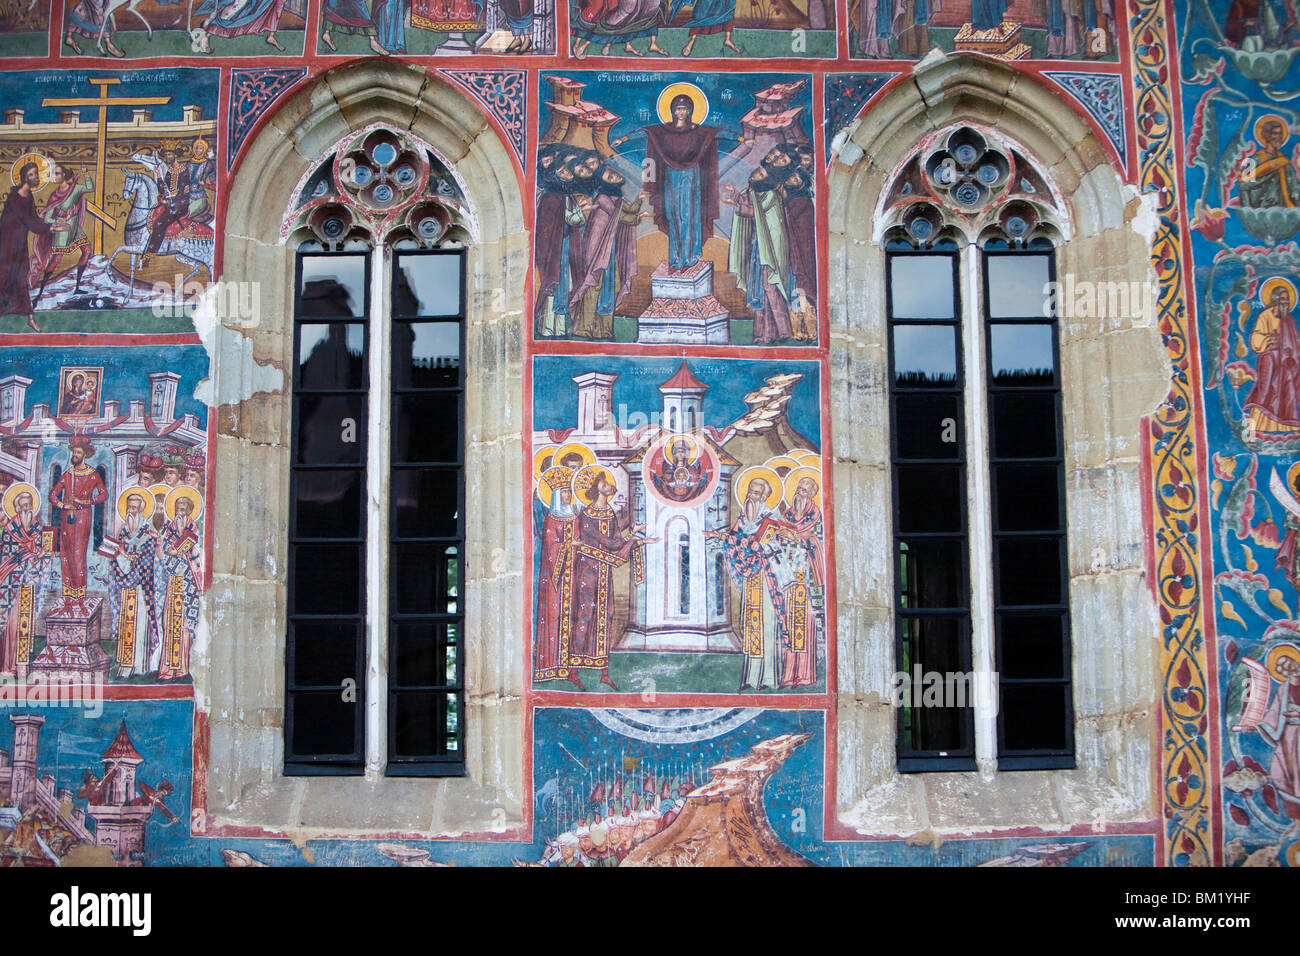 Monastère Moldovita, UNESCO World Heritage Site, la Bucovine, Roumanie, Europe Banque D'Images